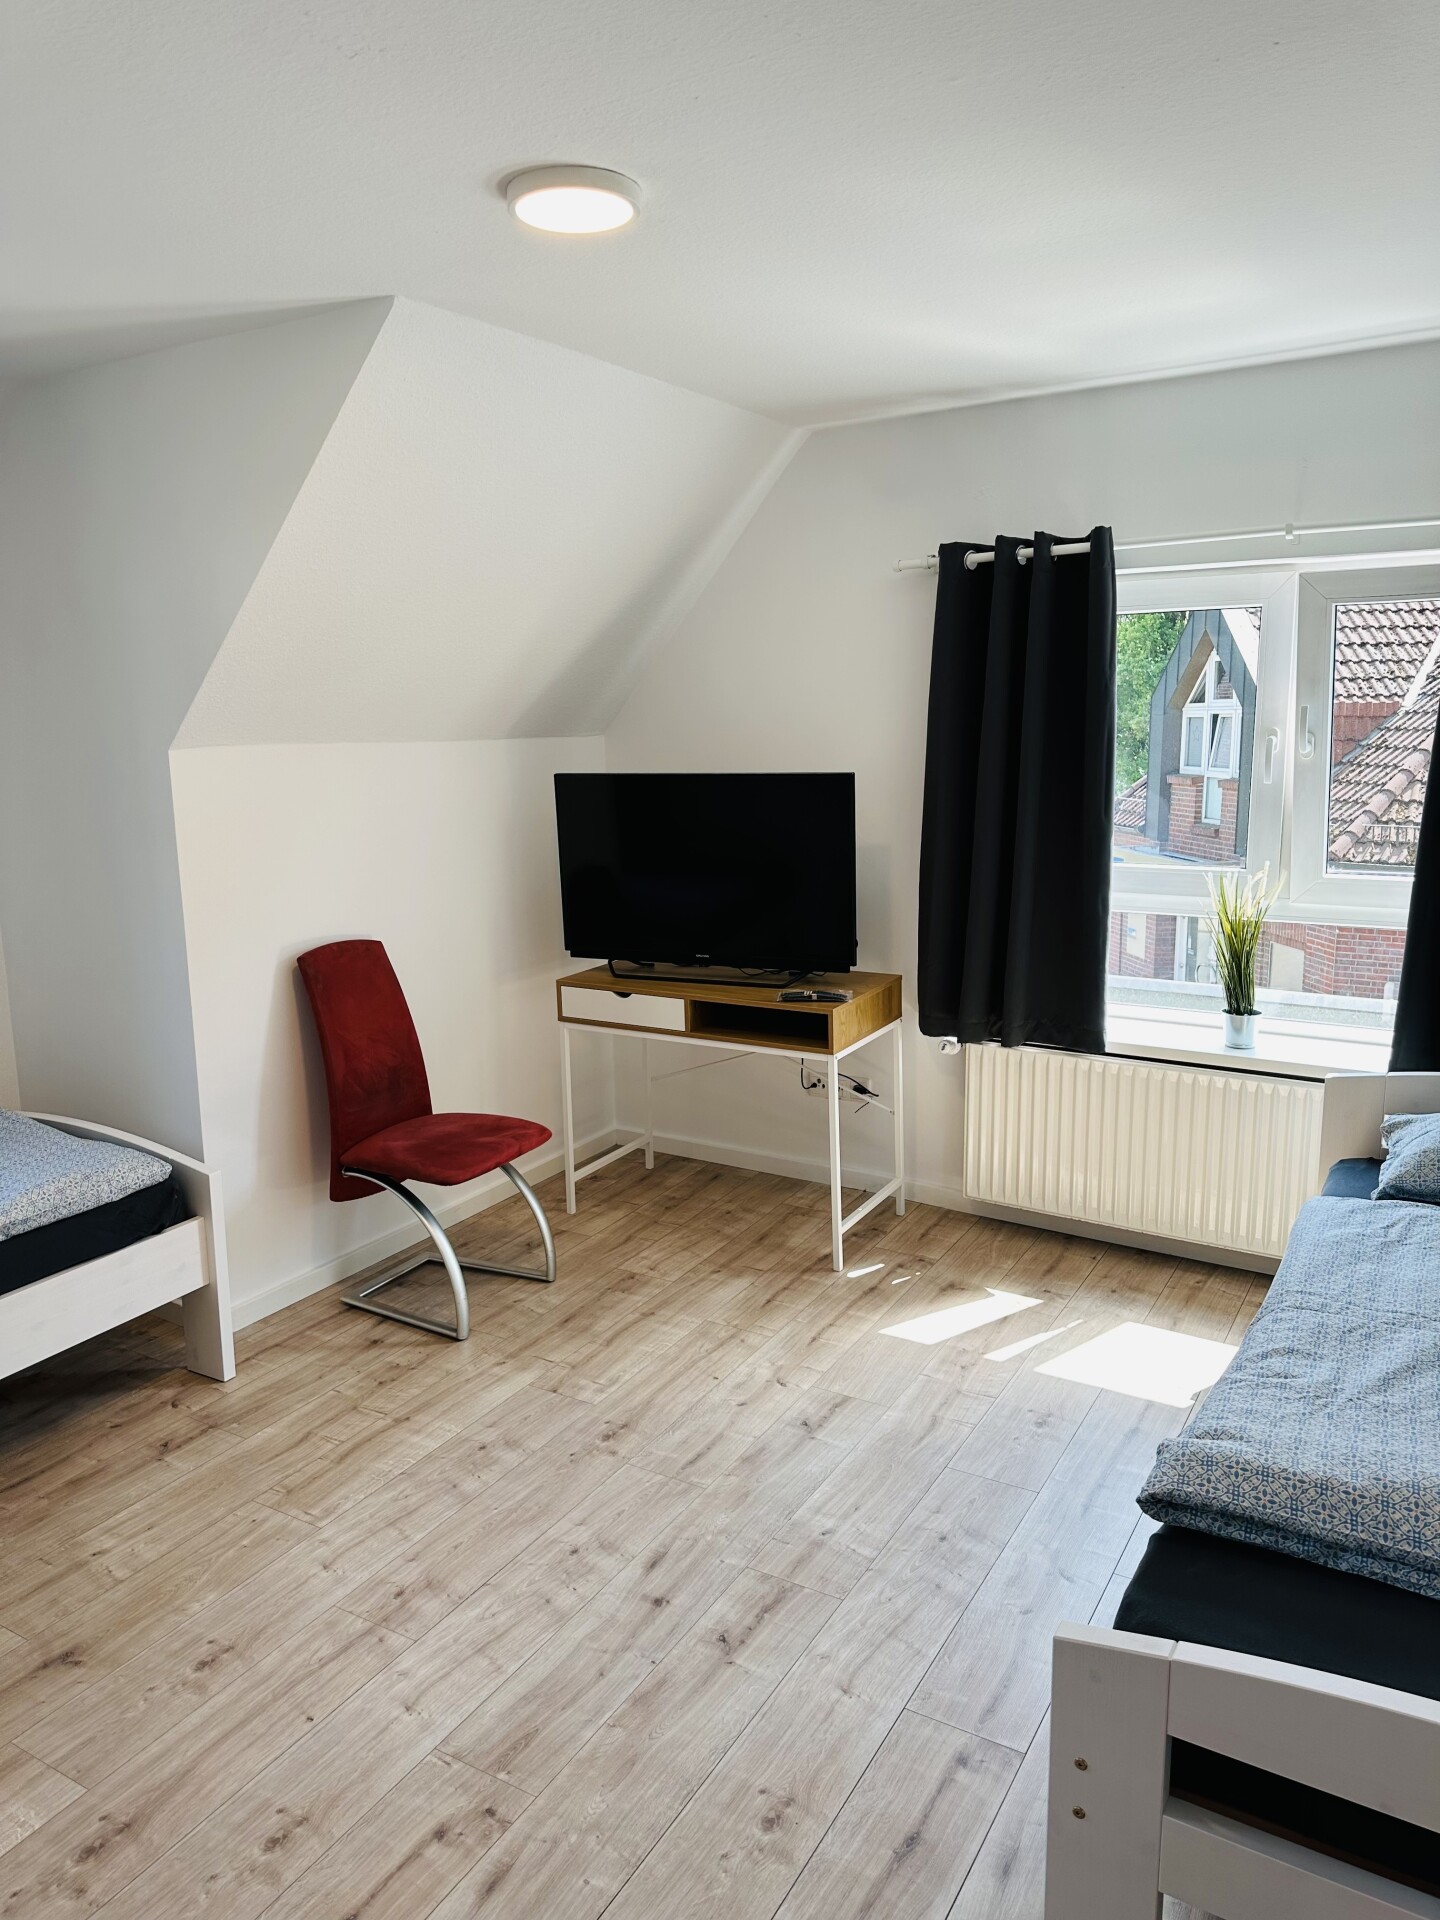 Apartment Appartement in Bremt Ioannis Panidis  28759 Bremen 1690556694_64c3d91644d63